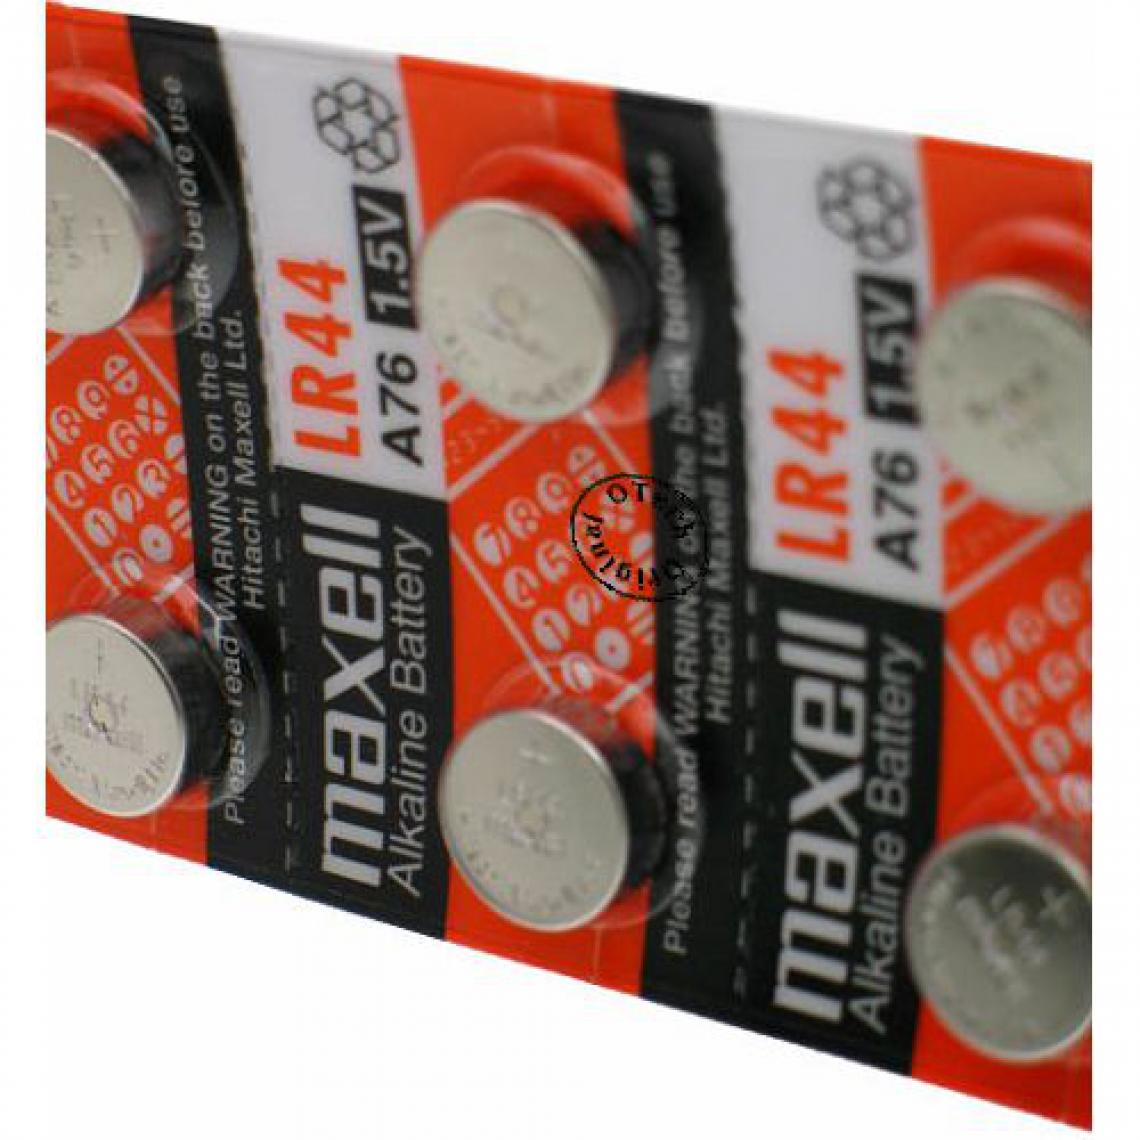 Otech - Pack de 10 piles maxell pour MAXELL LR1154 - Piles rechargeables